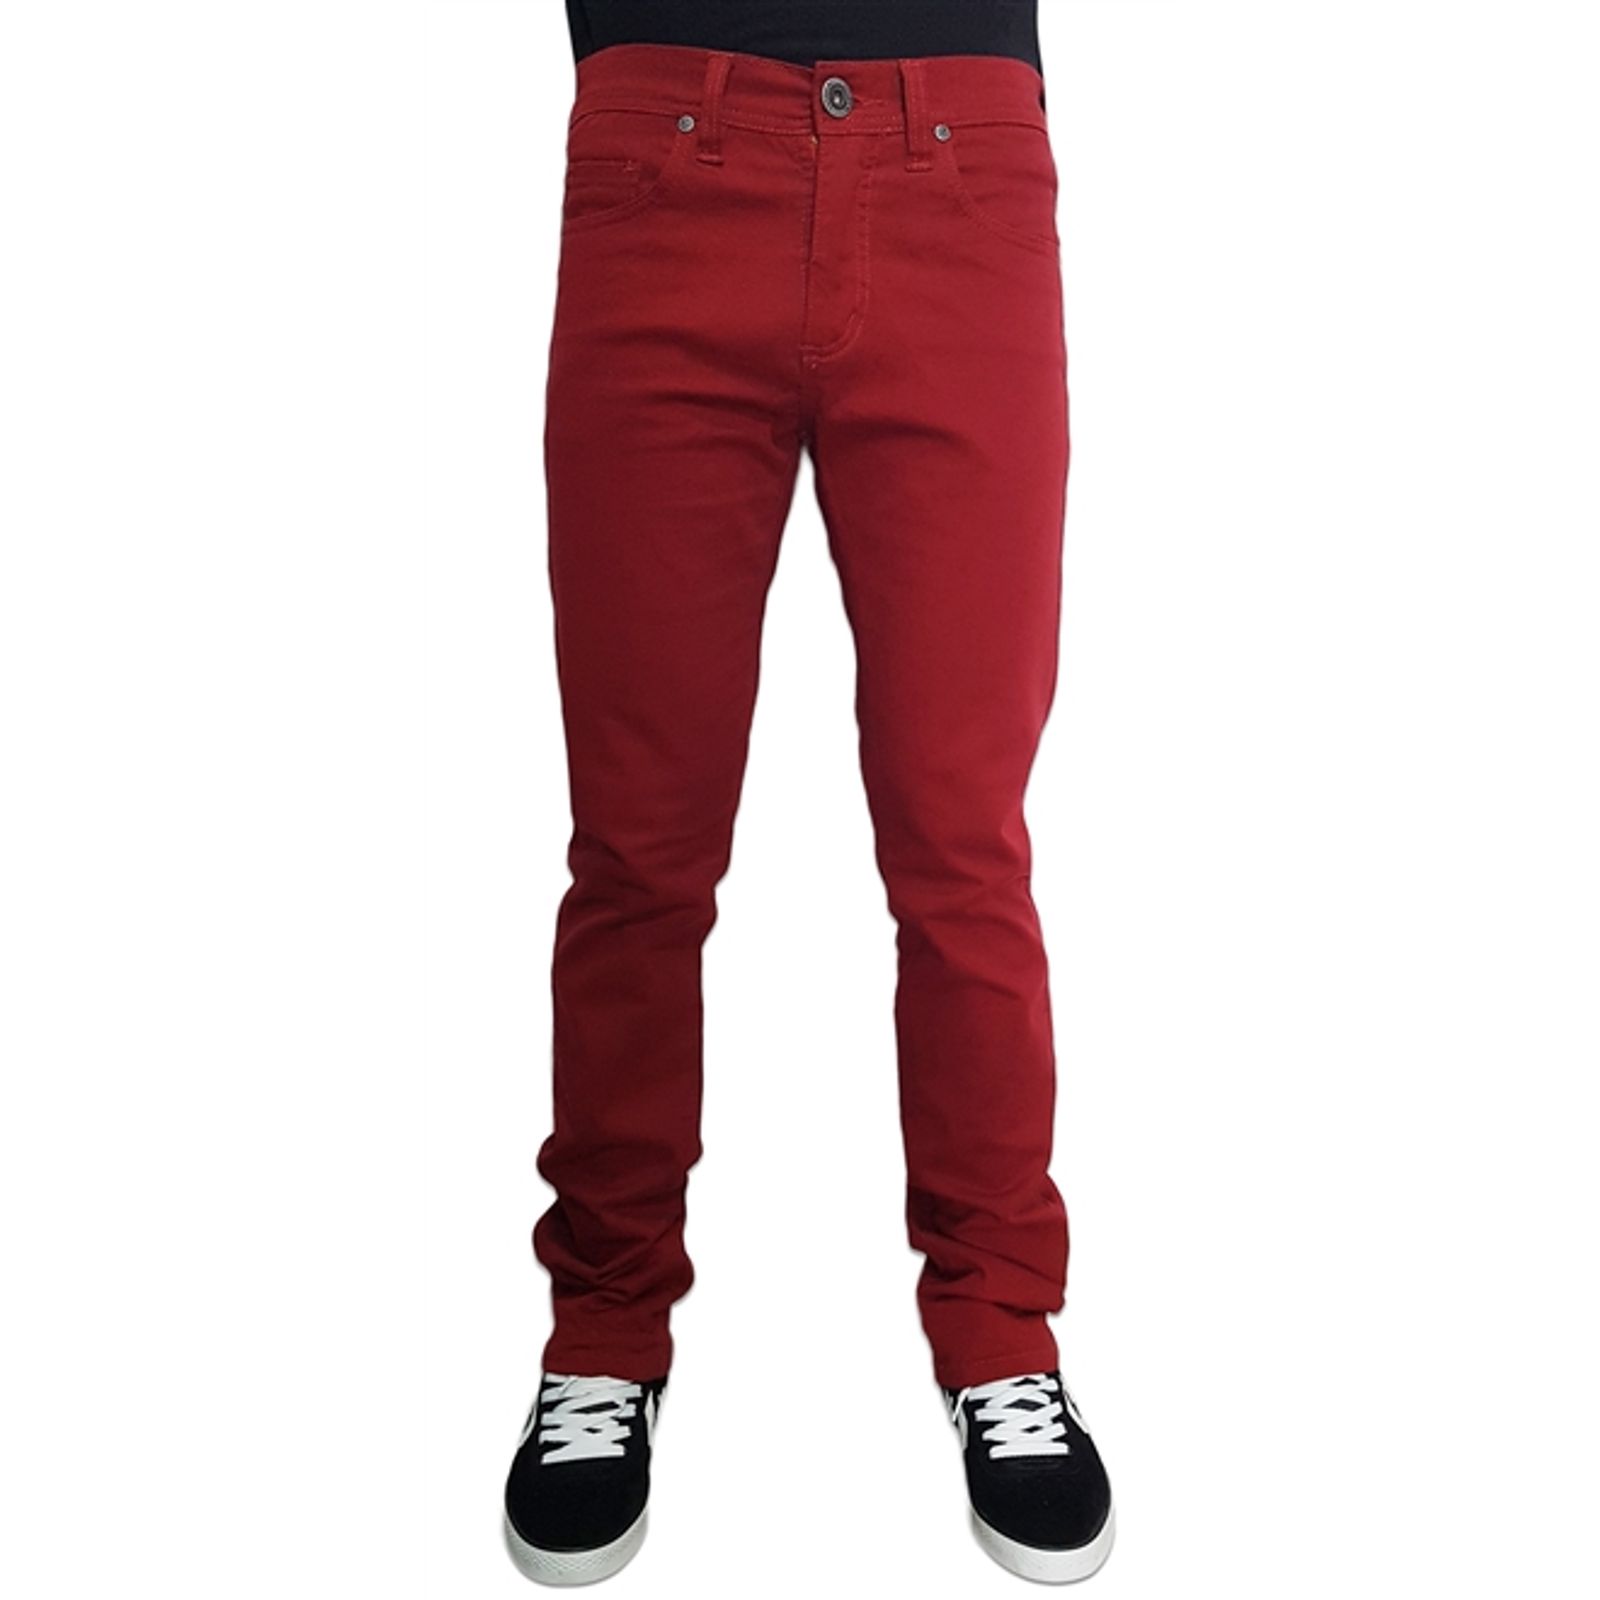 calca masculina vermelha